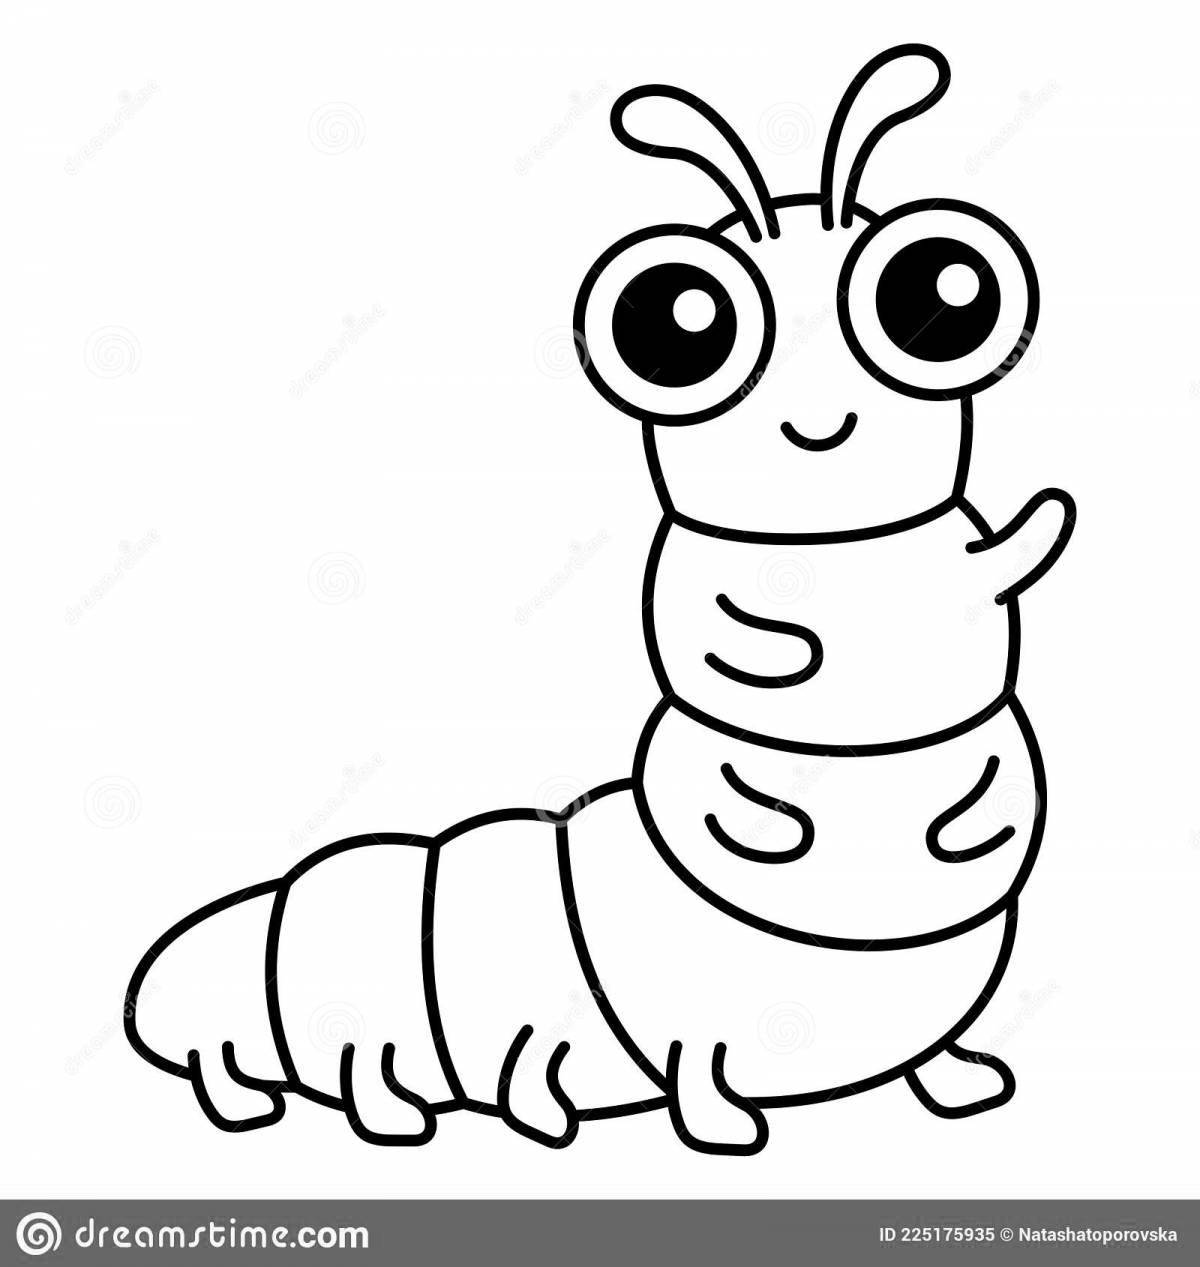 Adorable caterpillar coloring book for kids